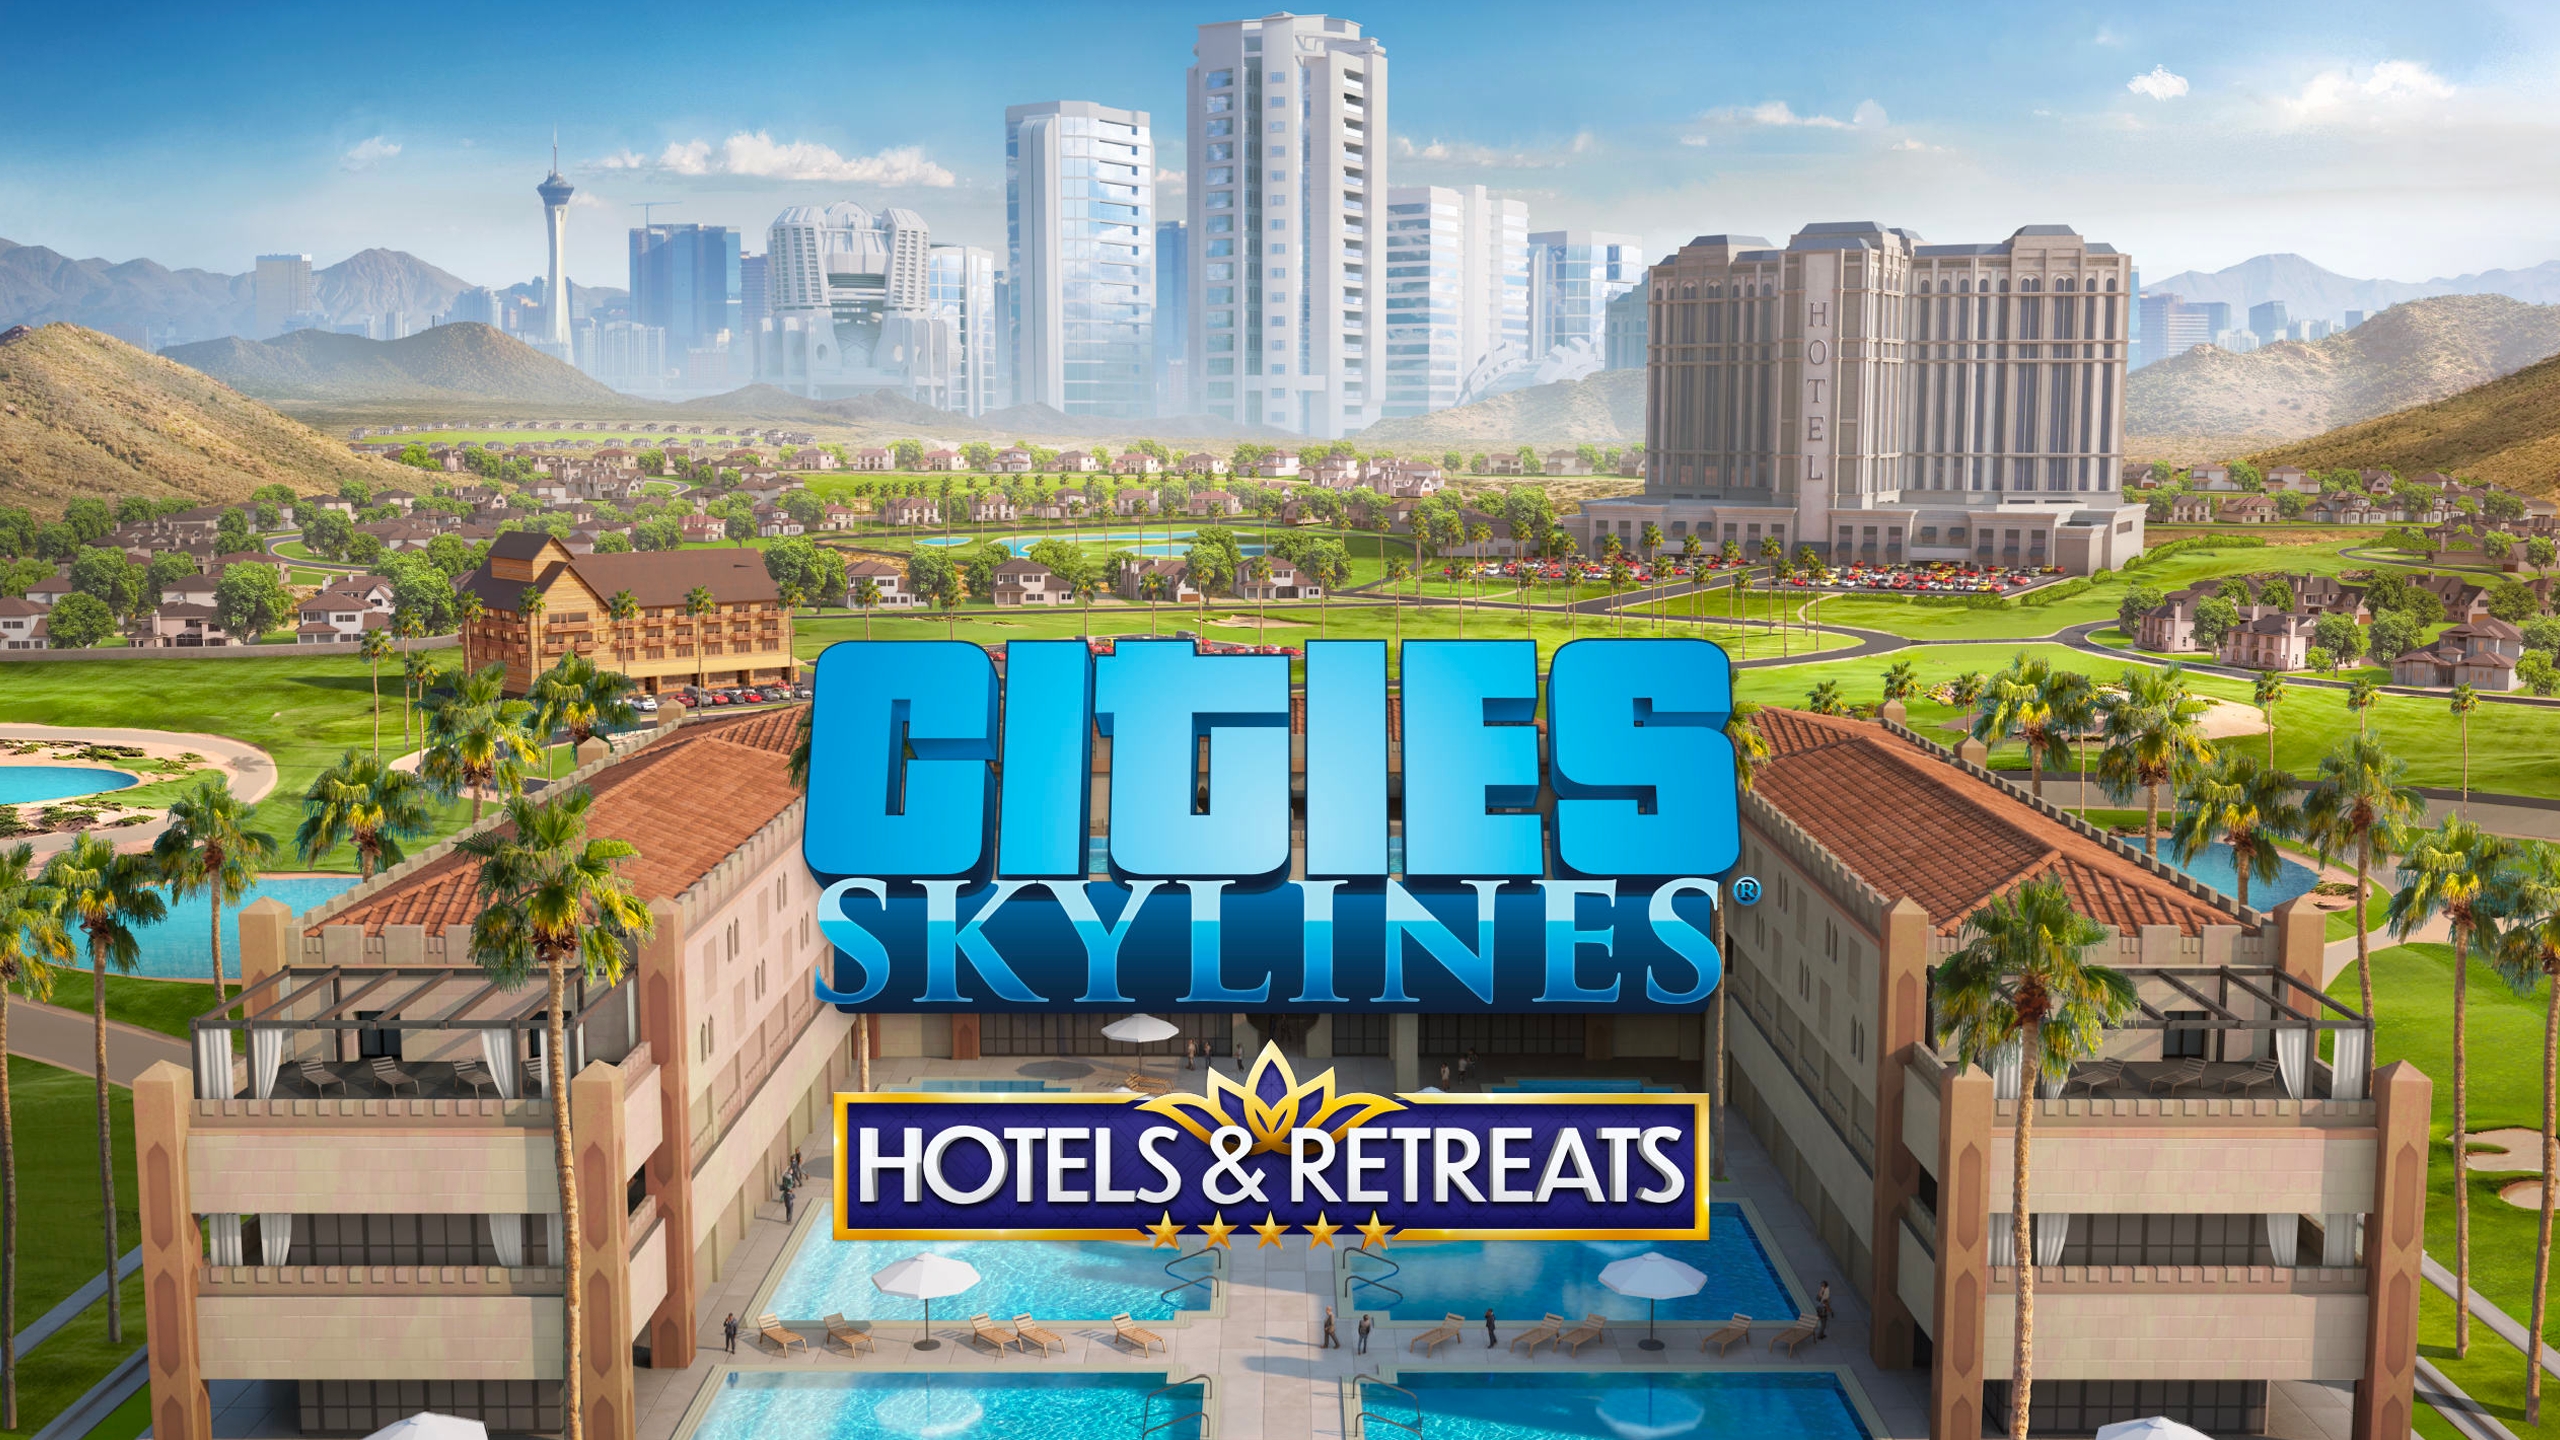 XB1 Cities Skylines: Green Cities DLC not installing